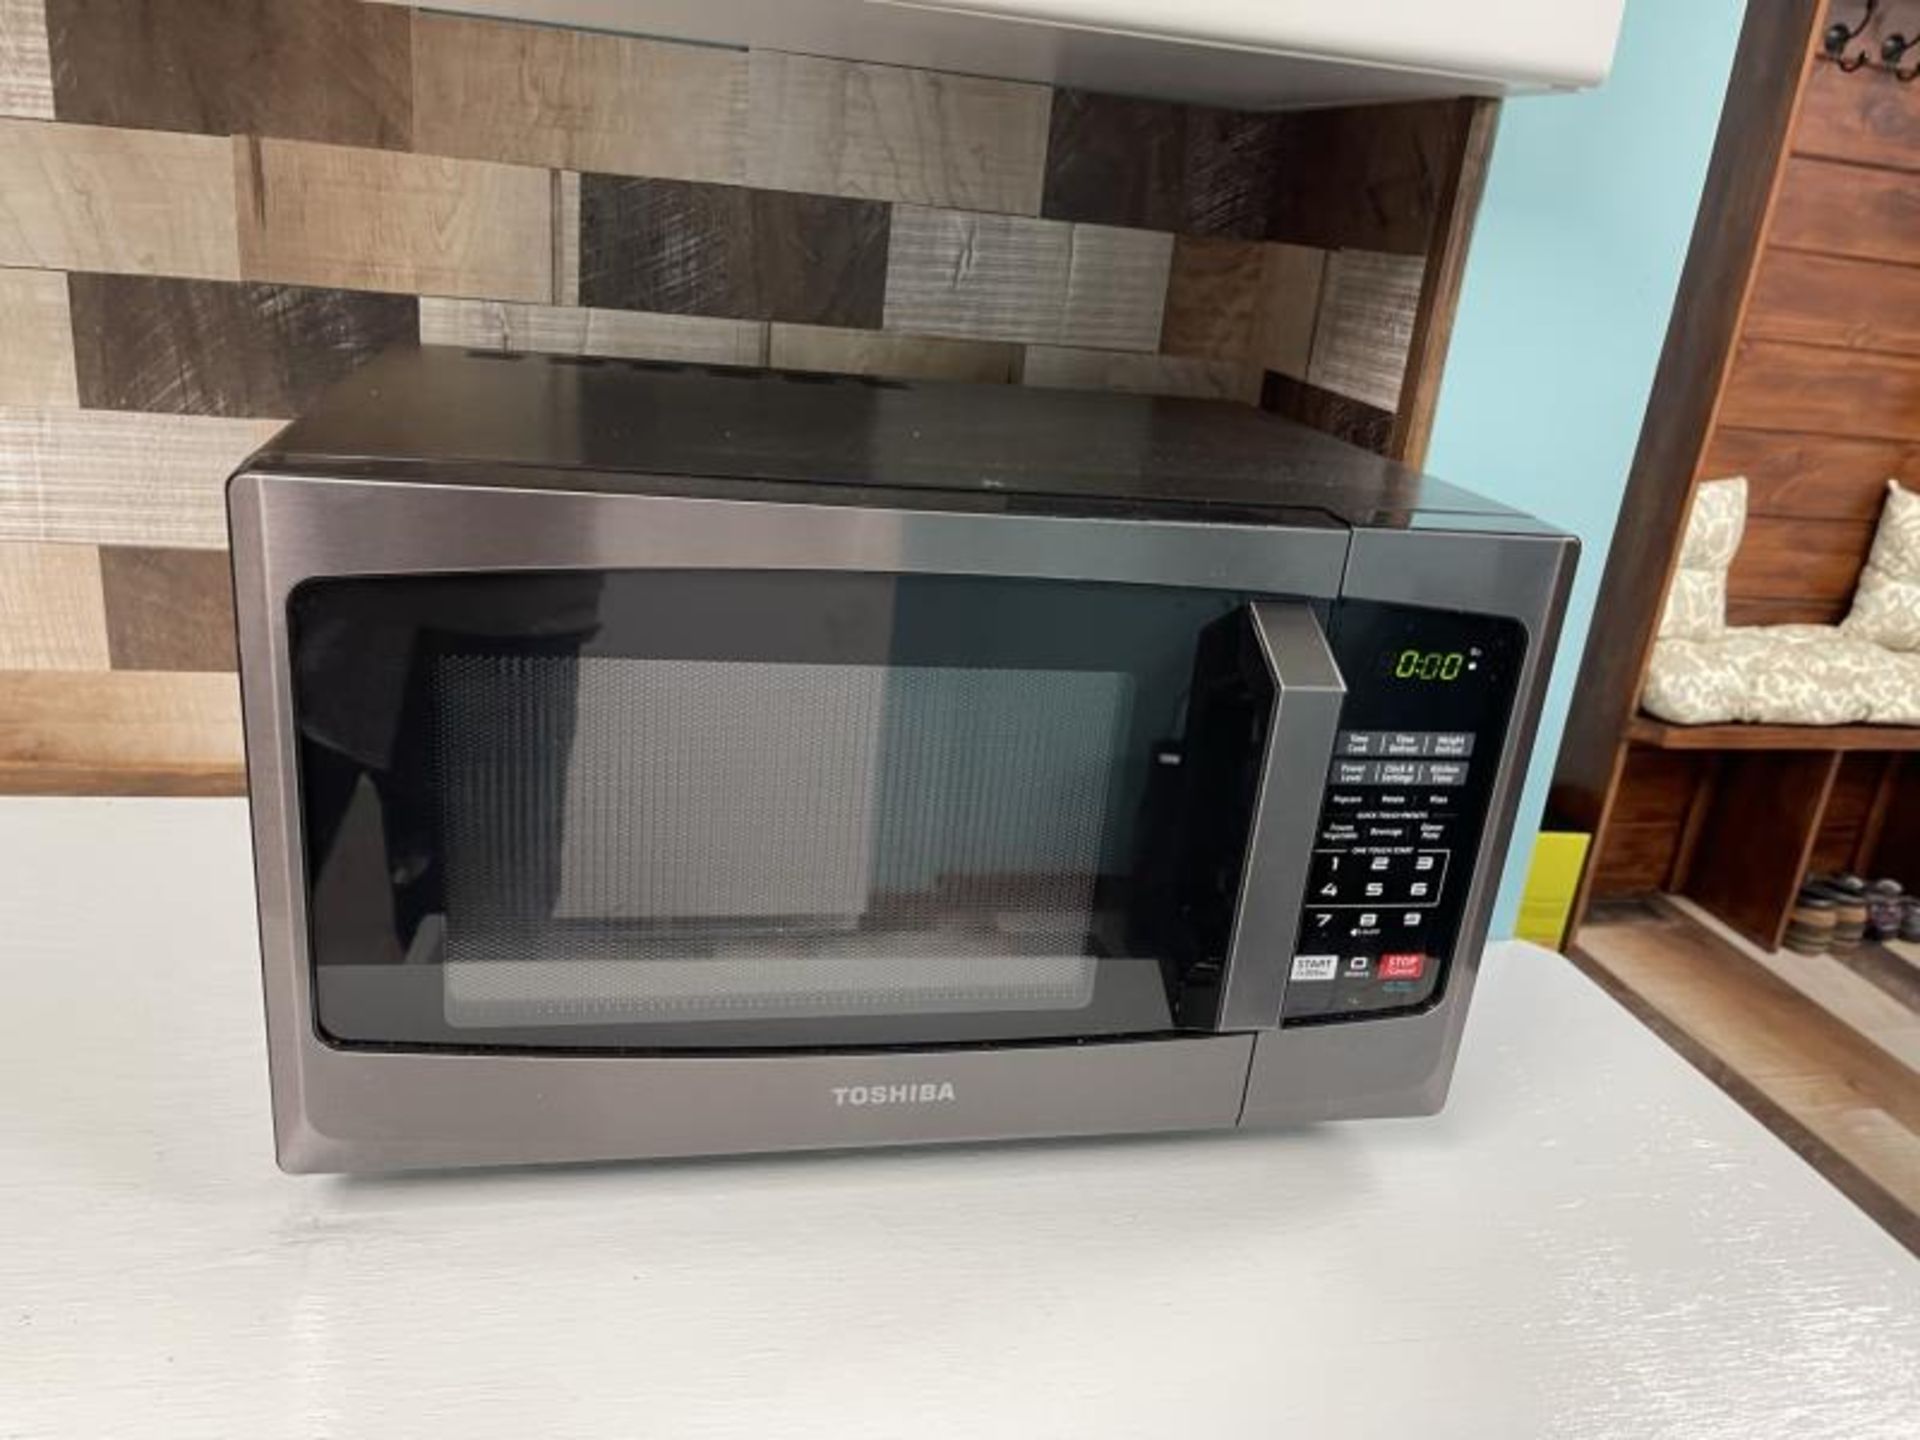 Farber Convection Toaster Oven, Black & Decker Toaster, Bunn Coffee Maker, Toshiba Microwave & Ninja - Image 3 of 4